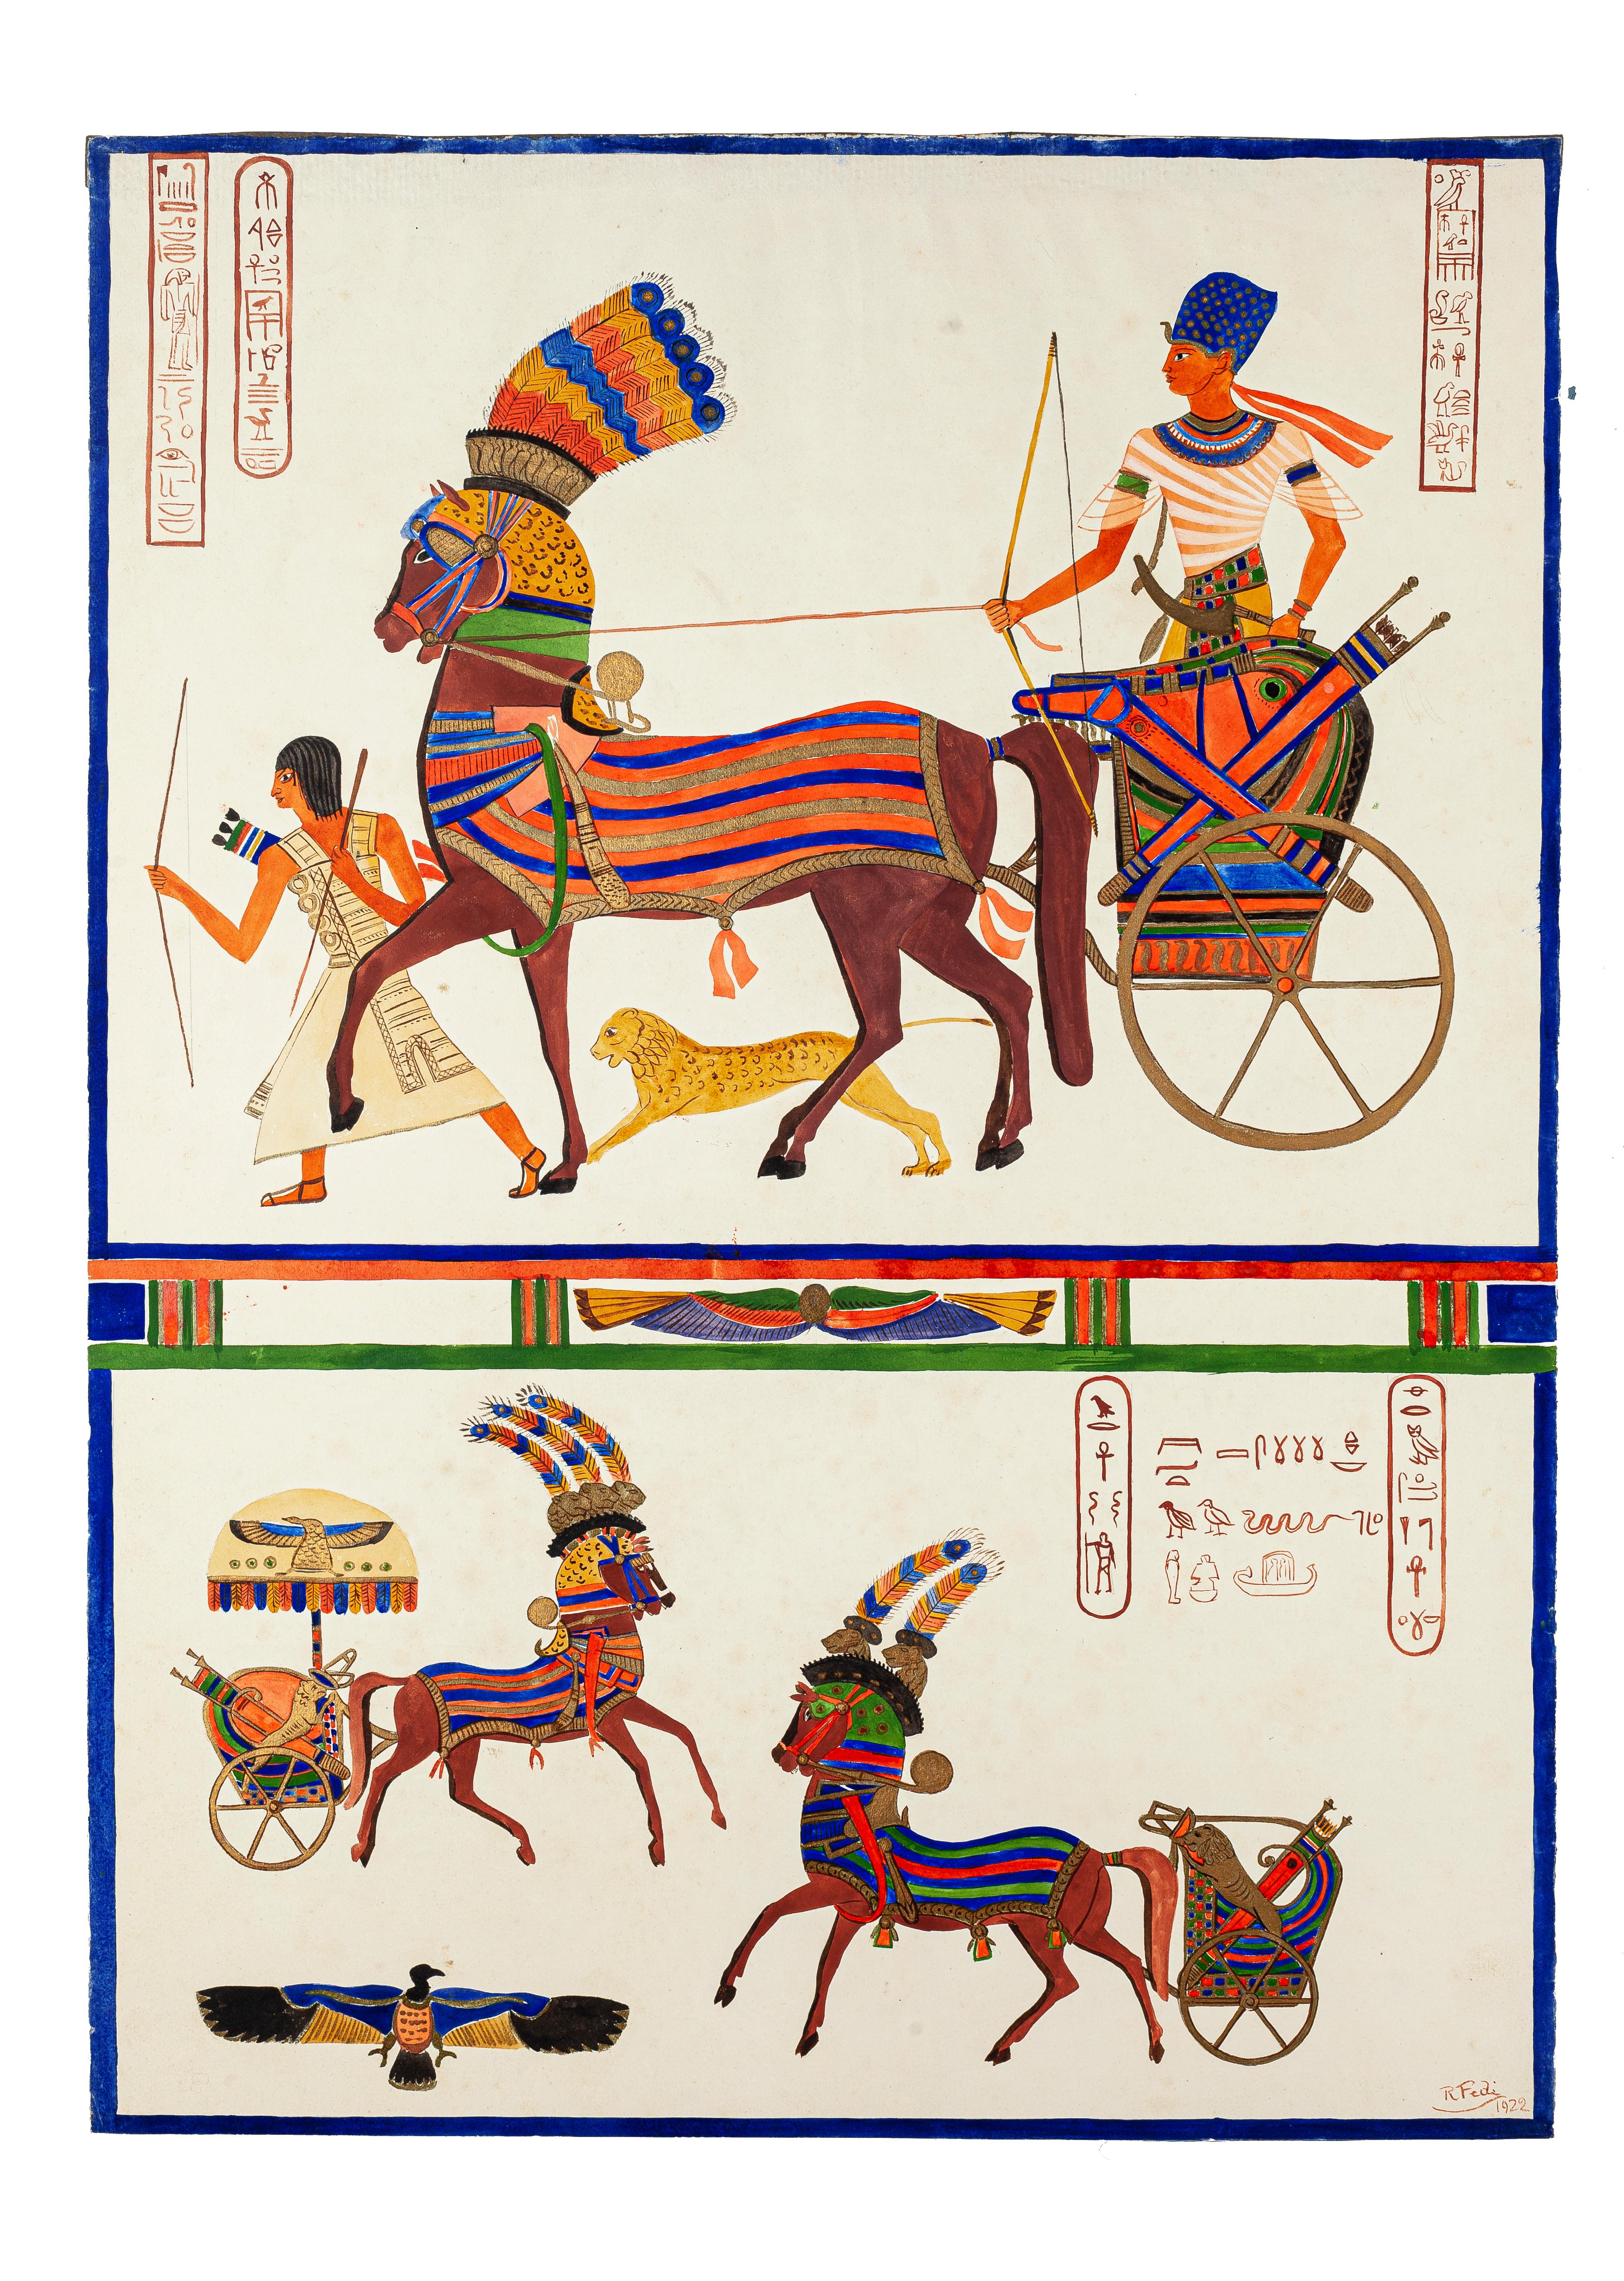 Riccardo Fedi Interior Art - Ancient Egypt - Watercolor by R. Fedi - Early 20th Century